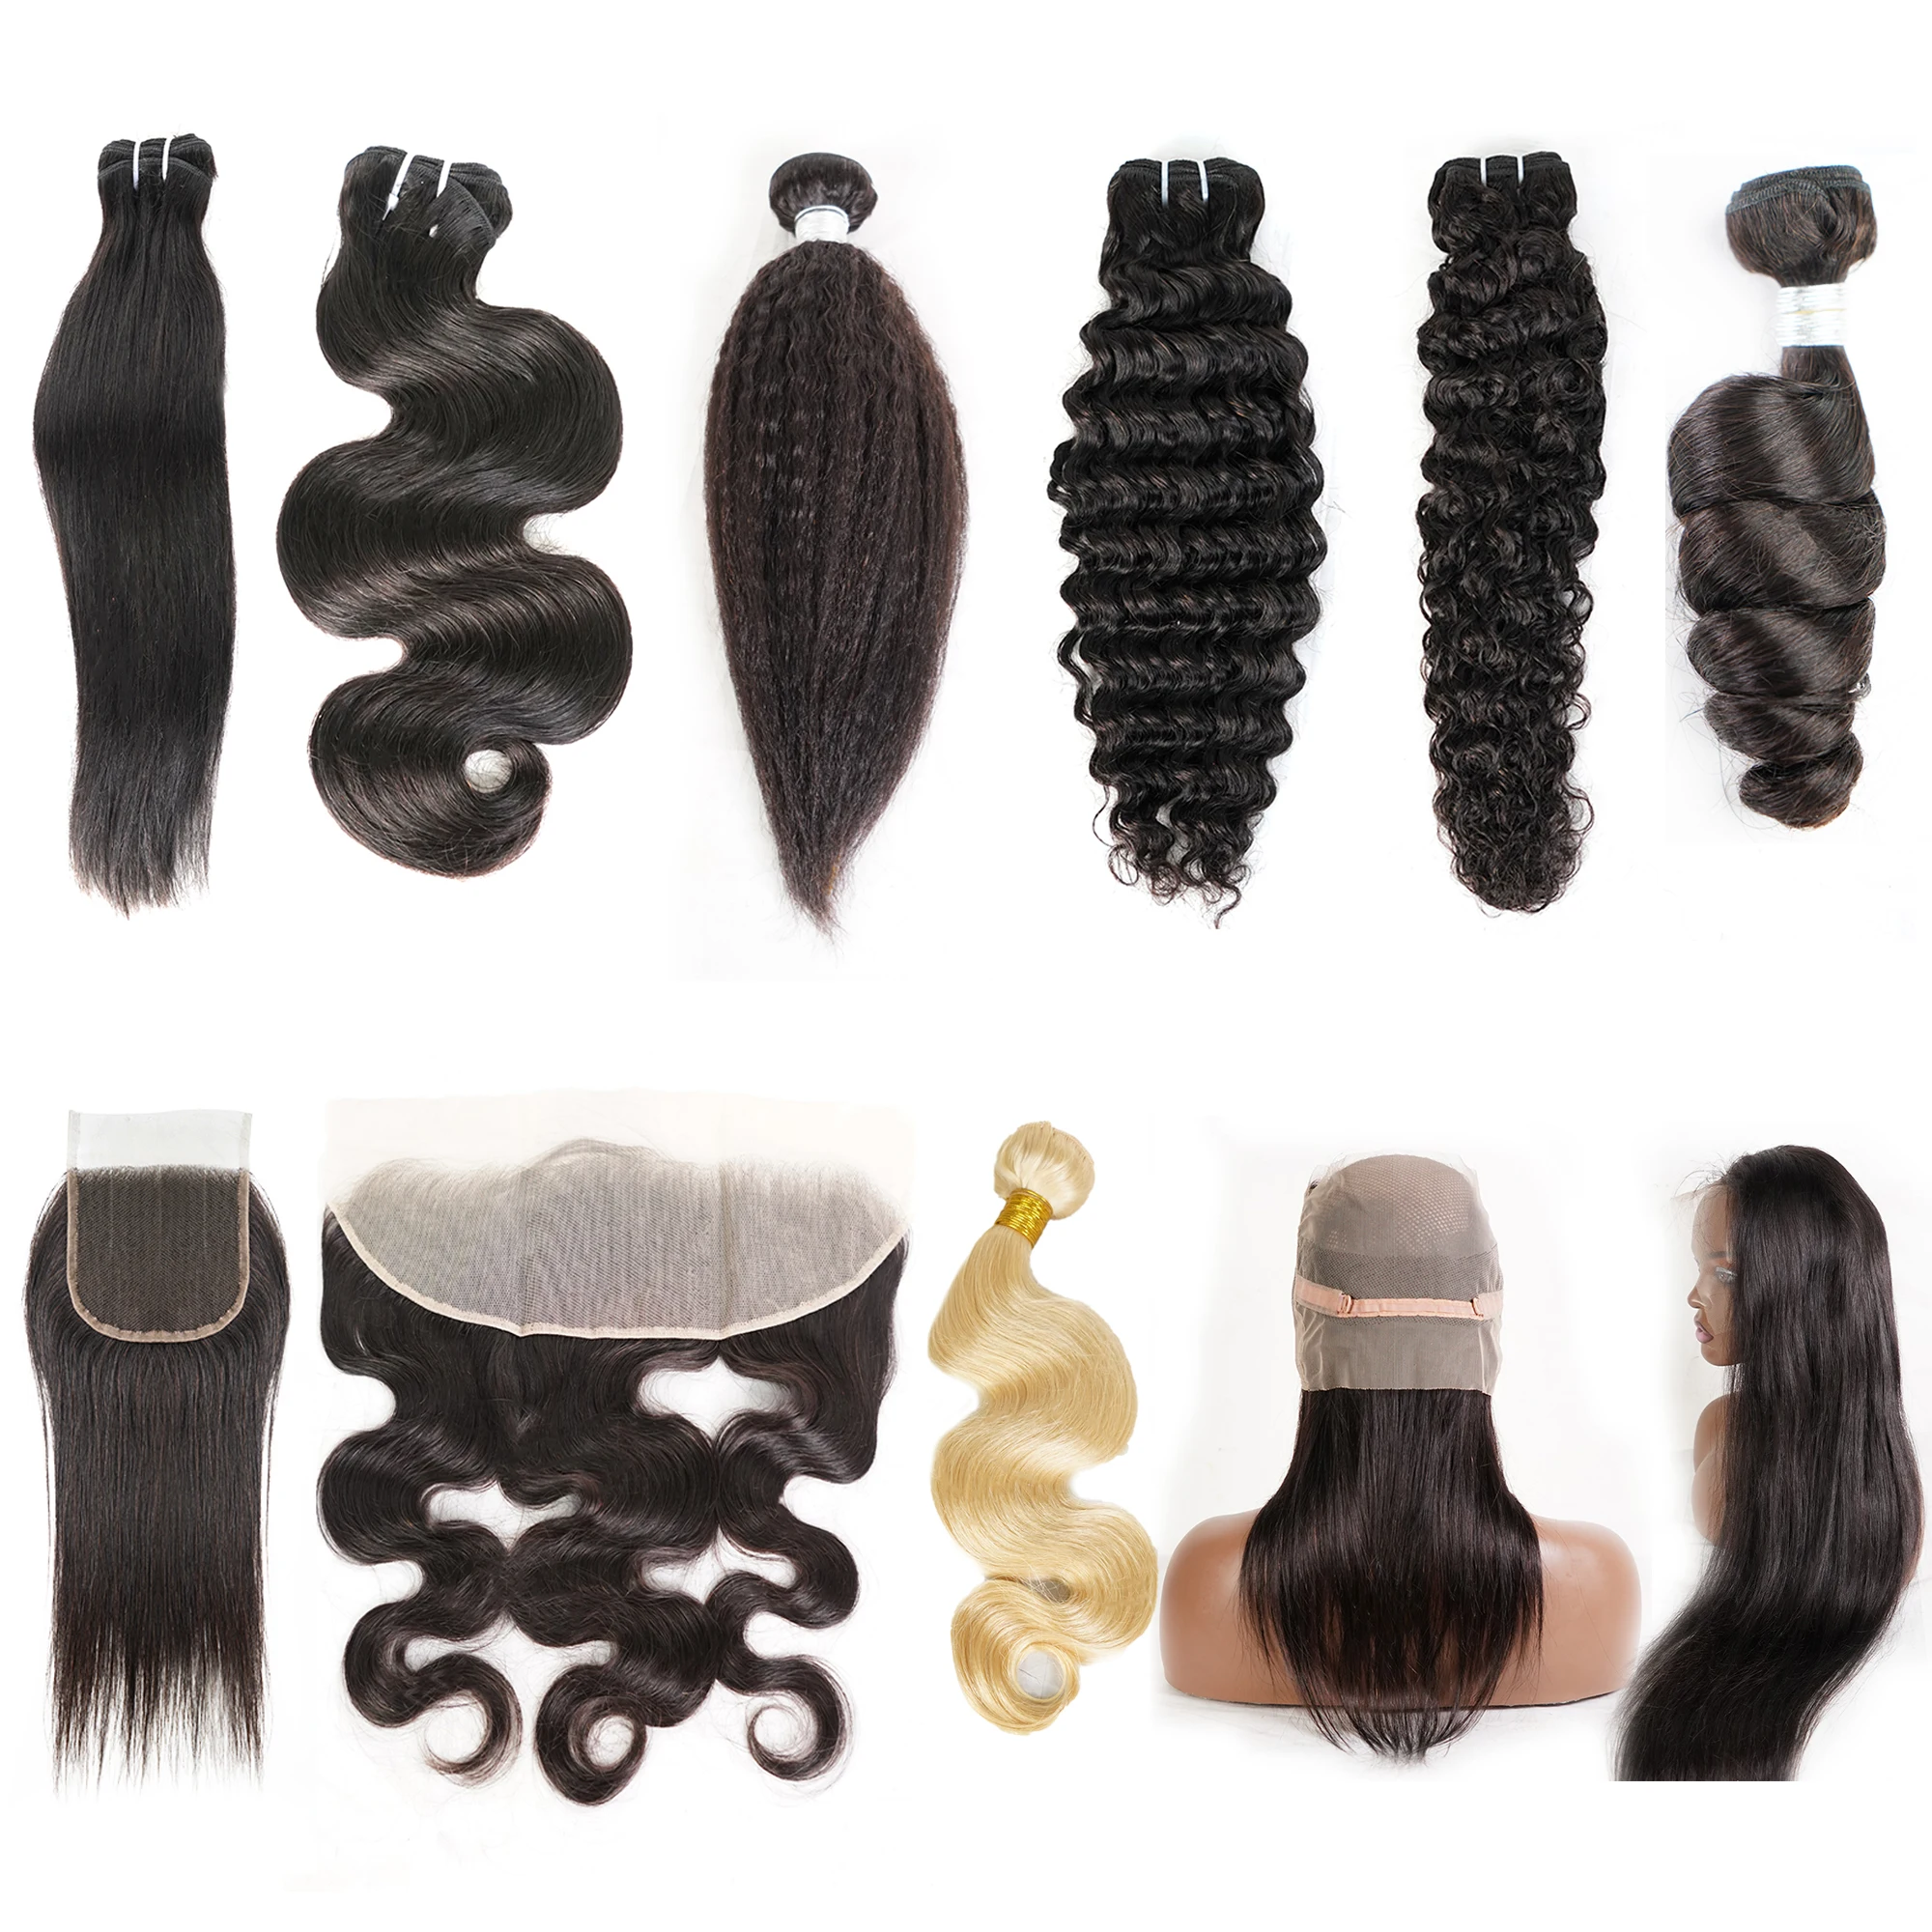 Wholesale Wigs 100% Human Hair Vendors ,Raw Virgin Peruvian Unprocessed Human Hair Curly Bundles,Bone Straight Peruvian Hair Wig